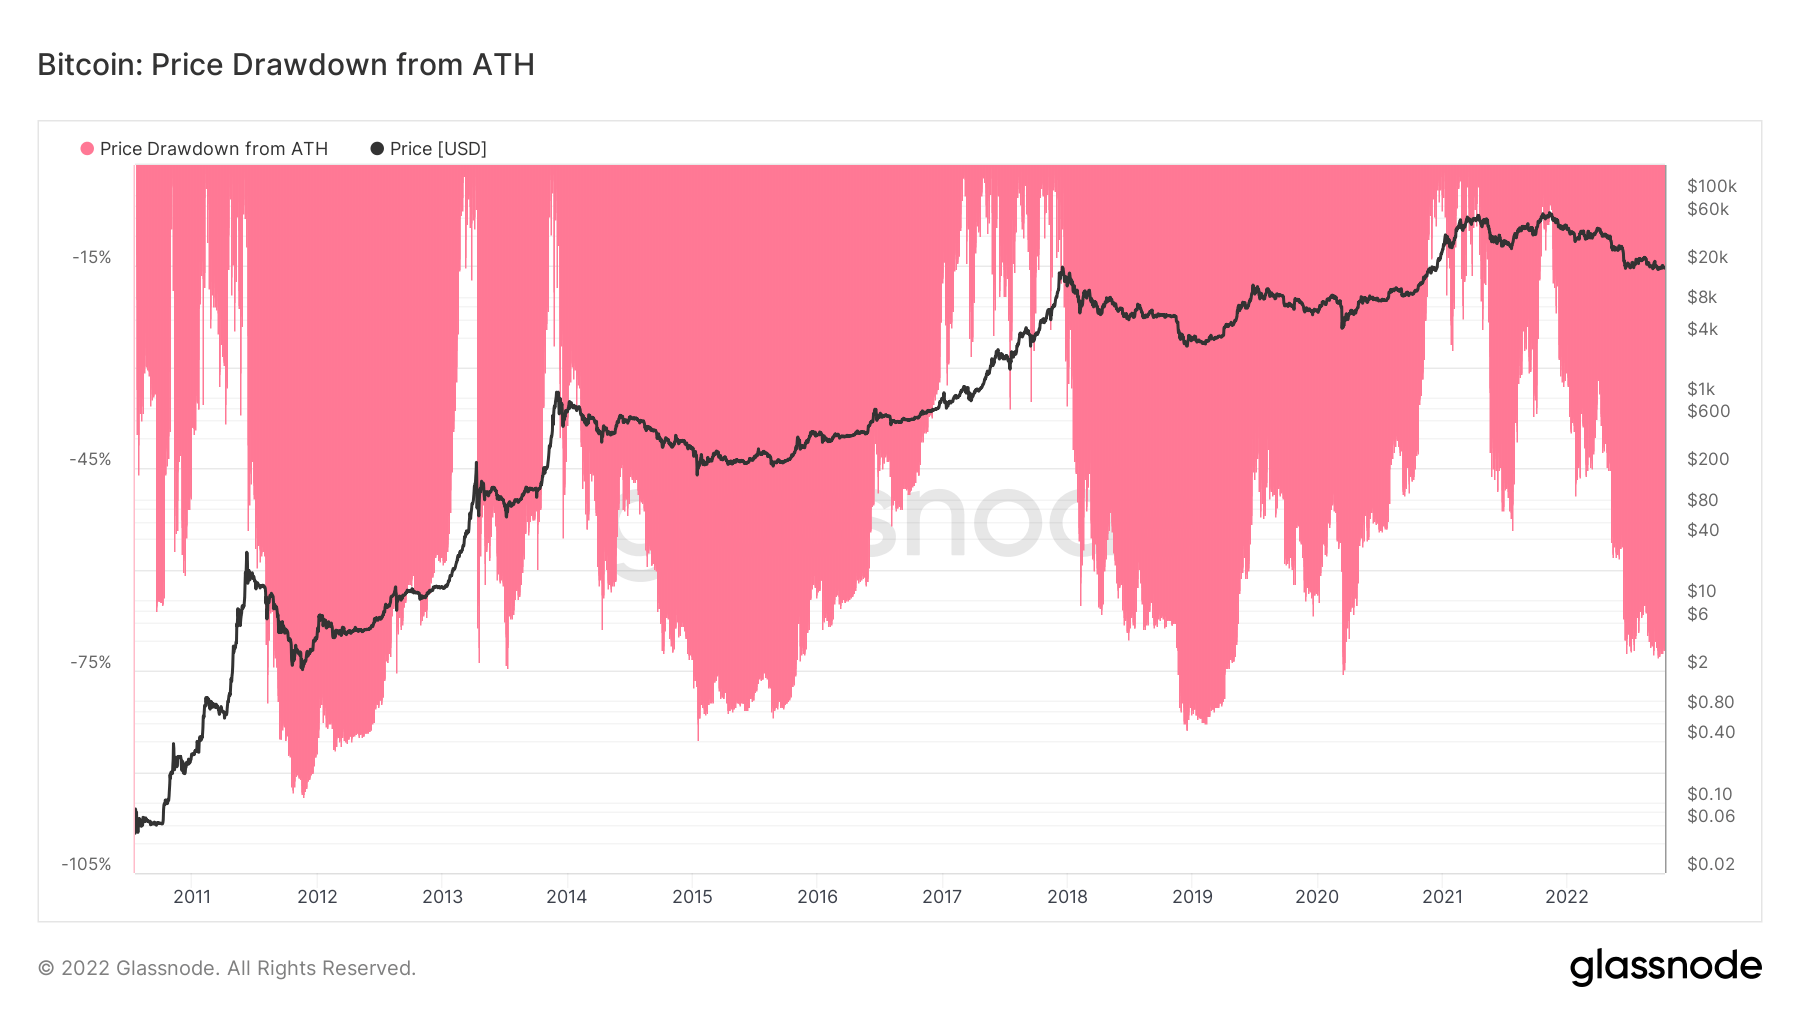 Bitcoin: Price Drawdown from ATH